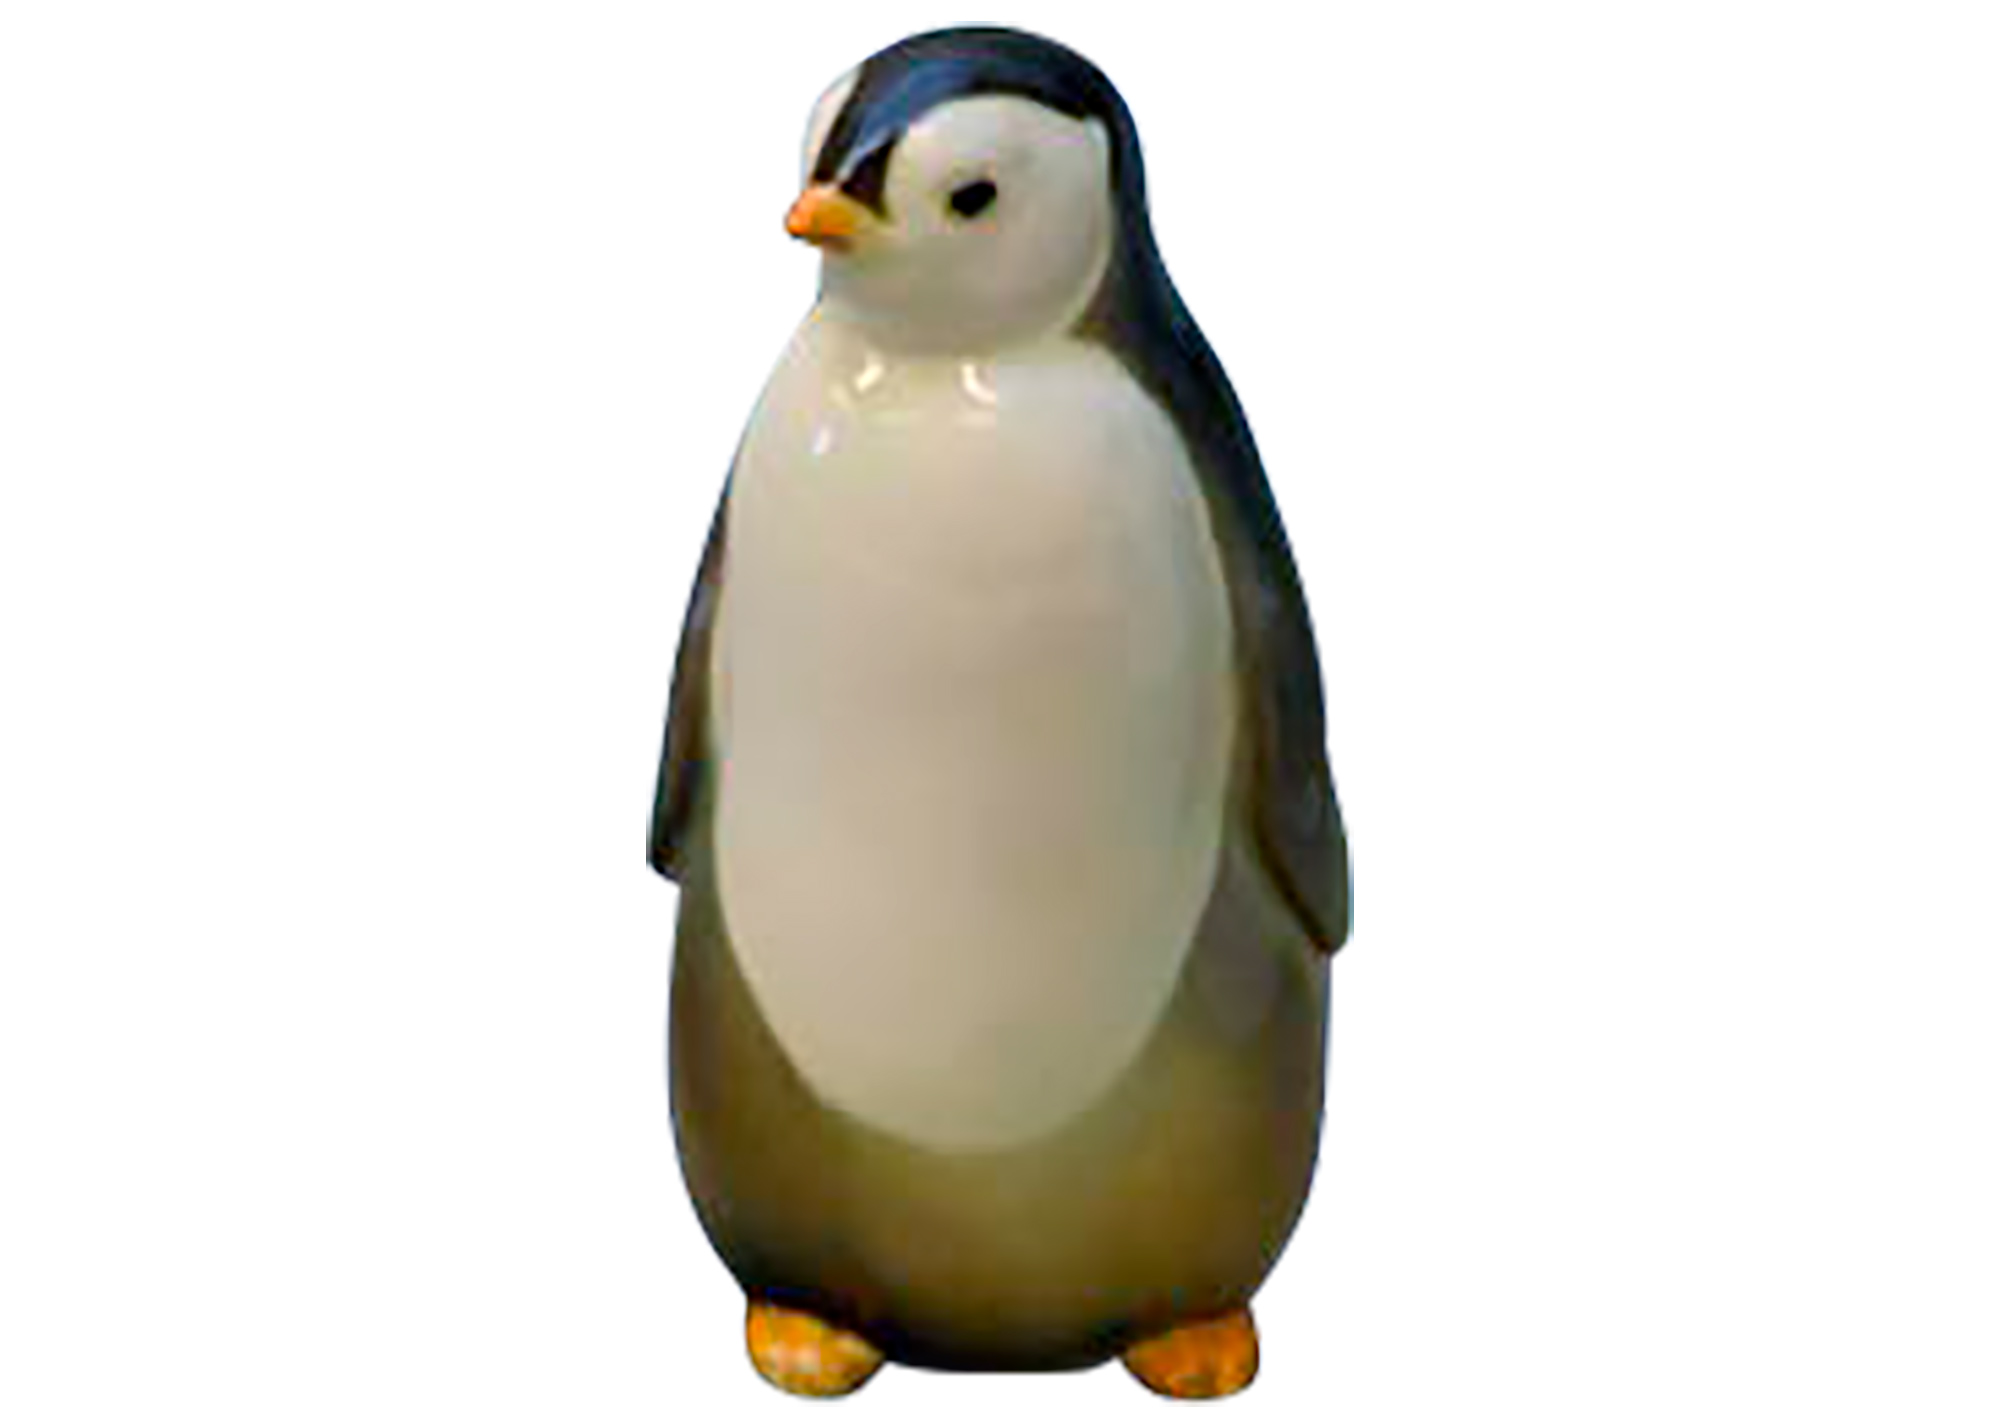 Buy Penguin Figurine Looking Right at GoldenCockerel.com